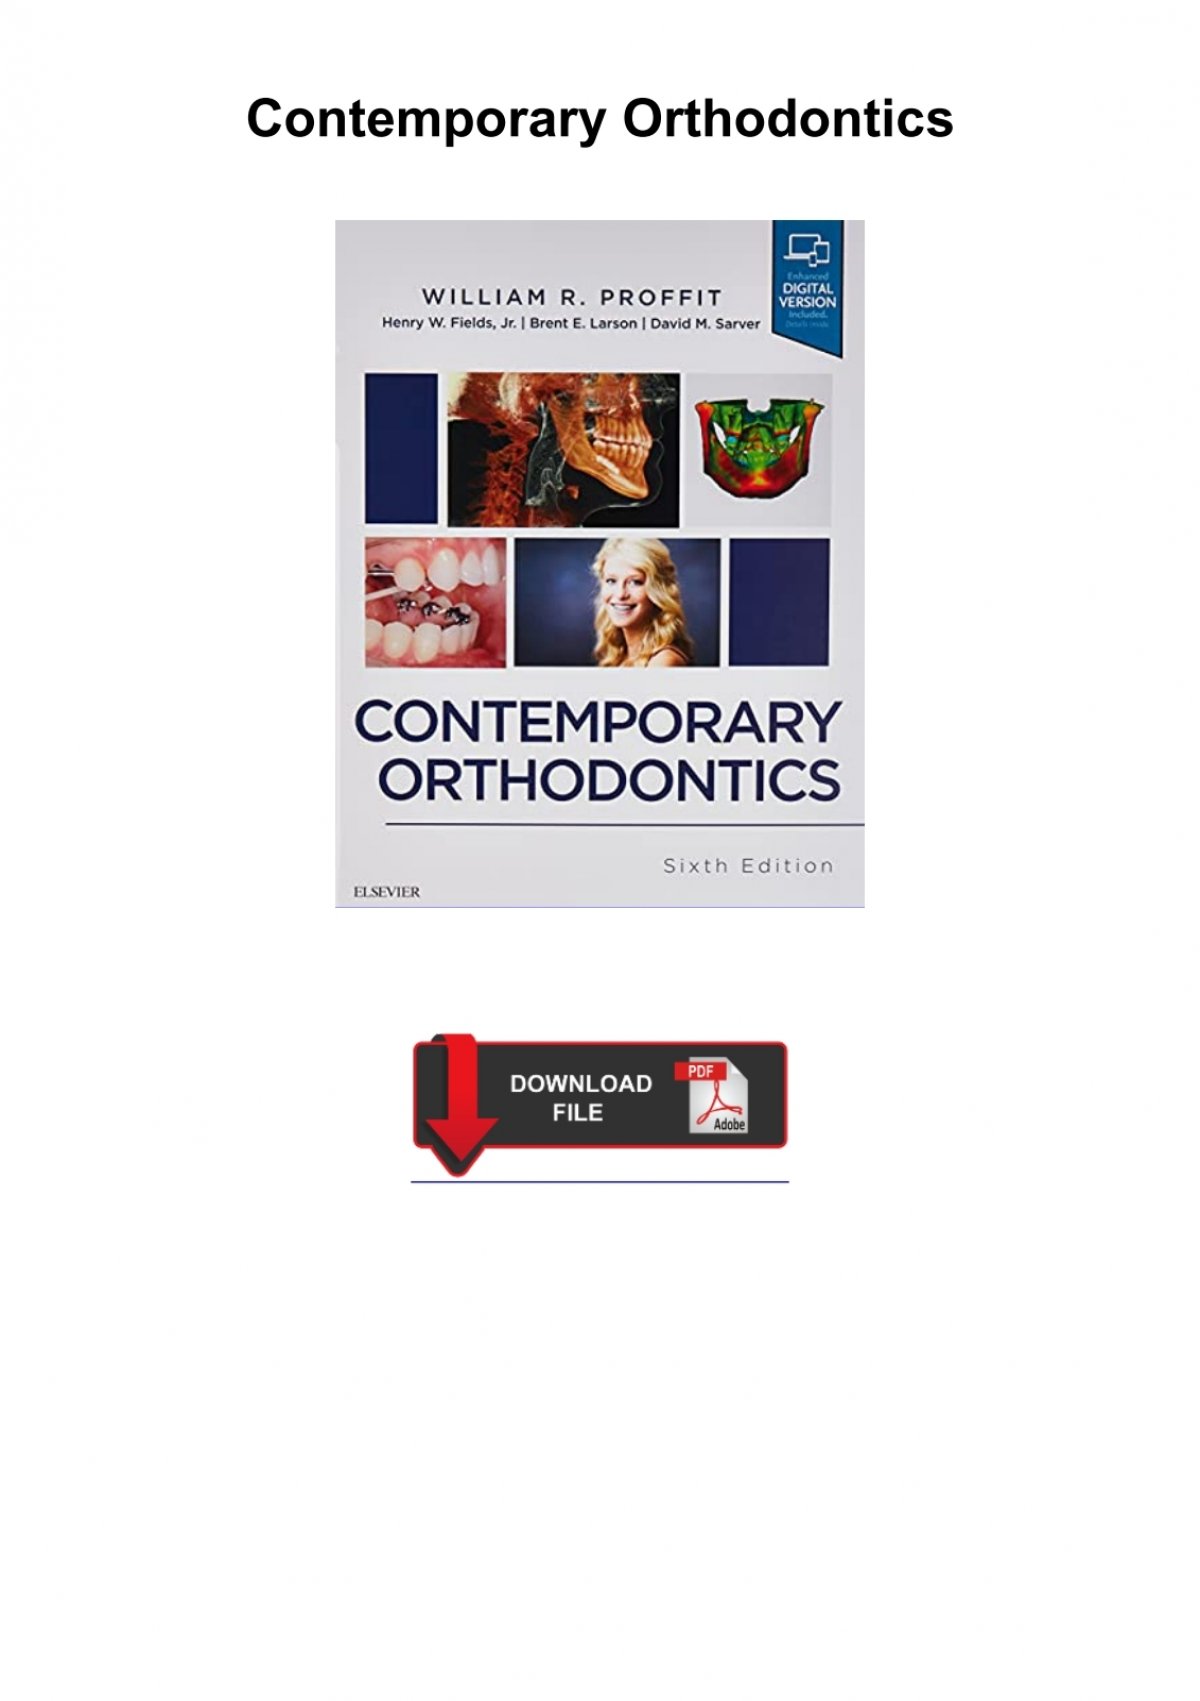 PDF✔️Download❤️ Contemporary Orthodontics